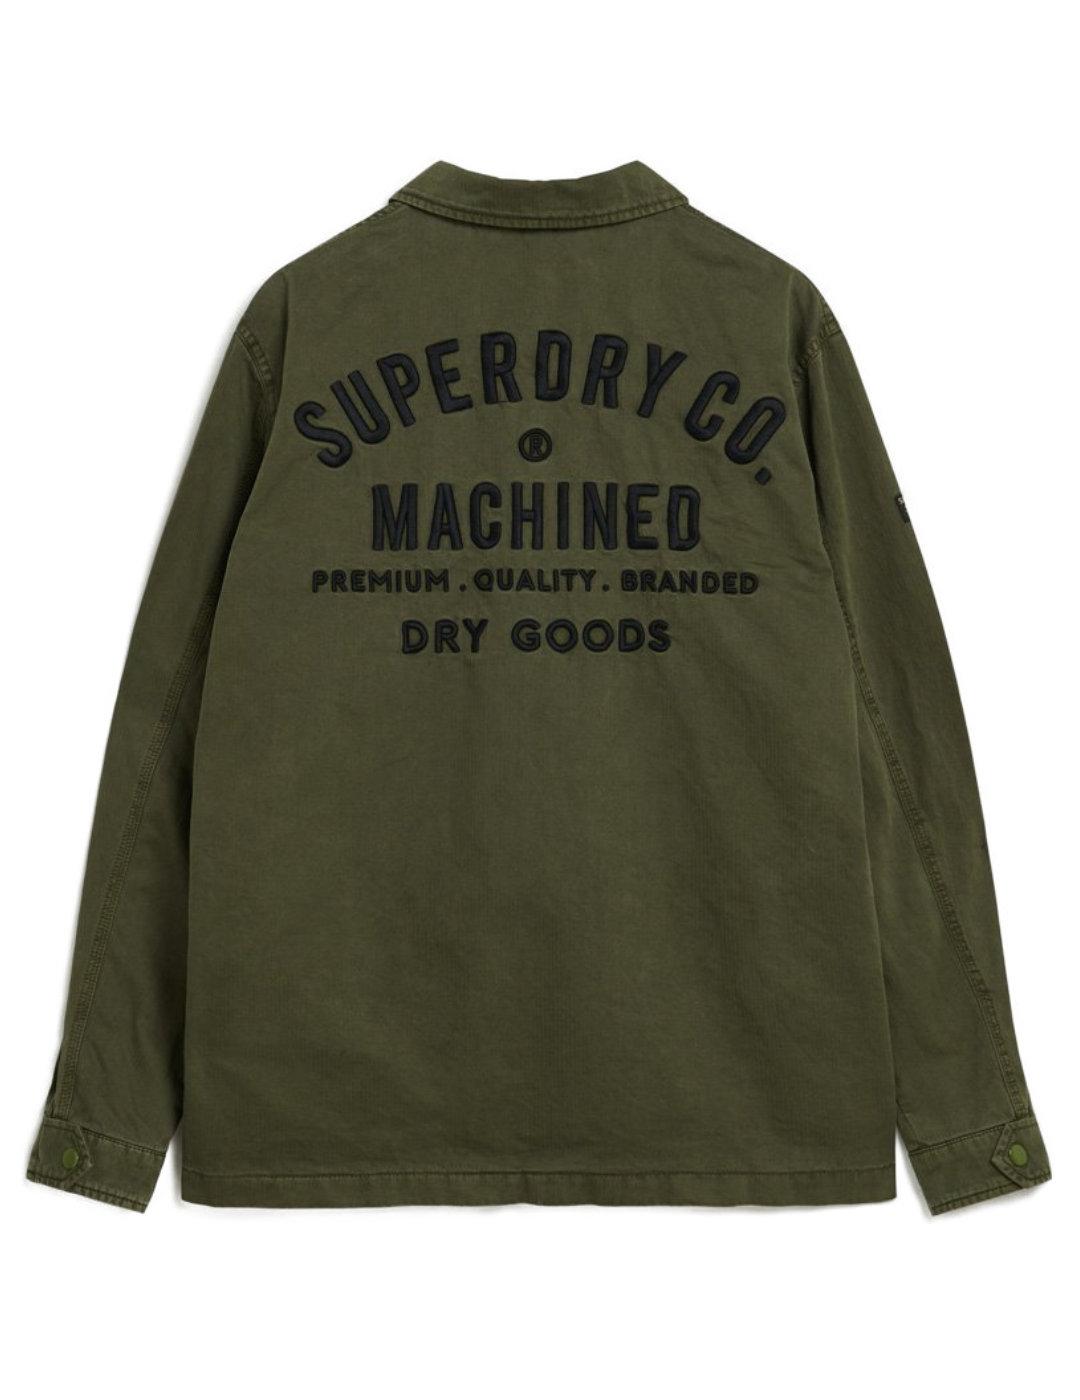 Sobrecamisa Superdry militar verde bordada Regular de hombre